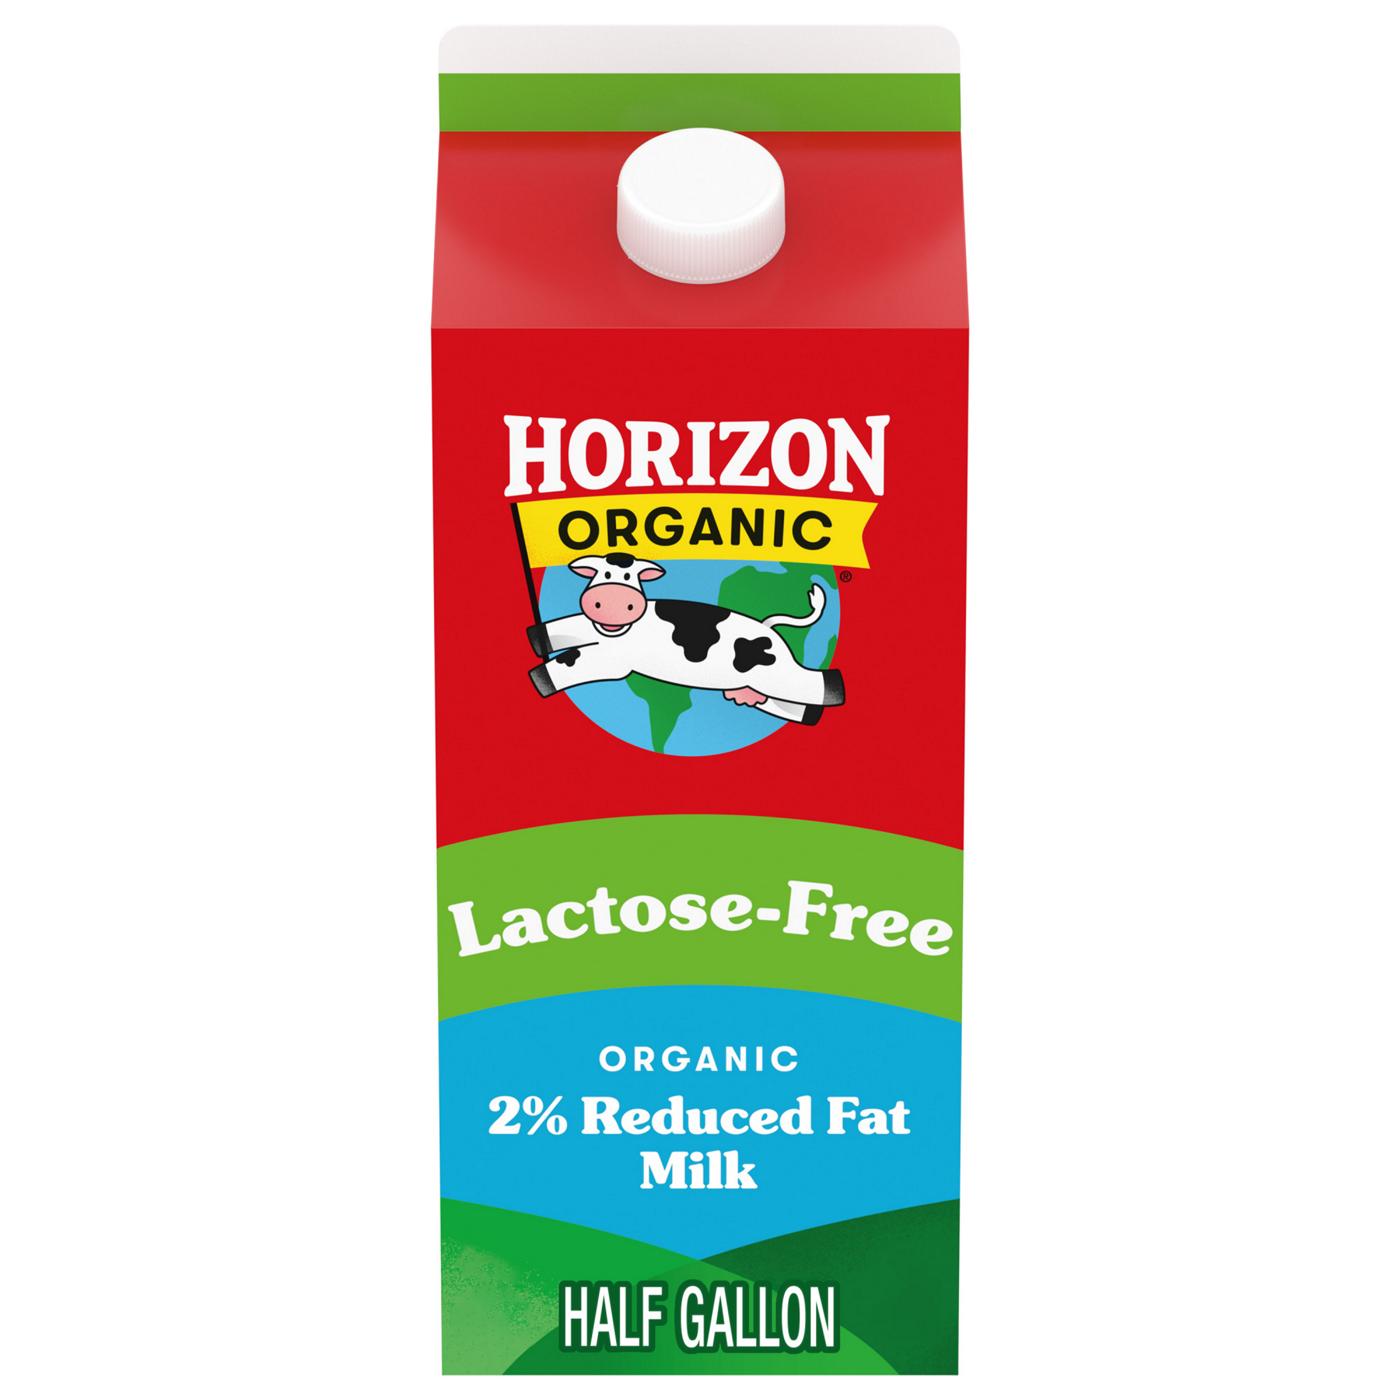 Horizon Organic Lactose Free Milk, 2% Reduced Fat Milk; image 1 of 6